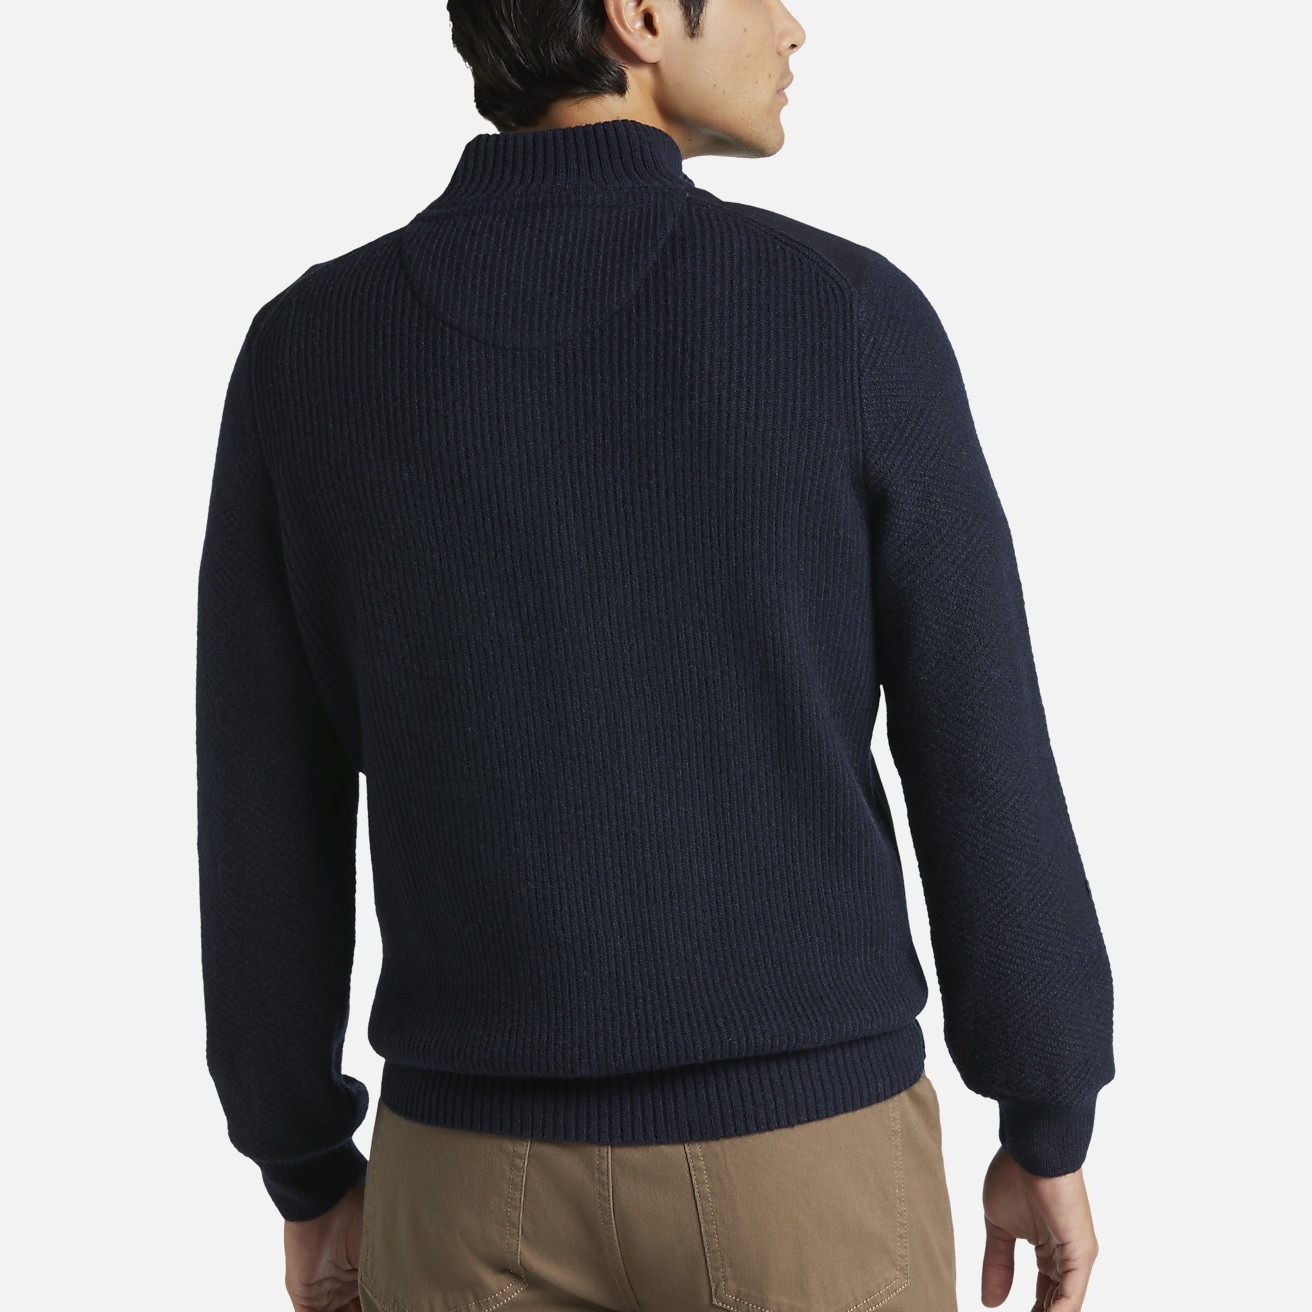 Joseph Abboud Modern Fit Sweater Blazer, All Sale